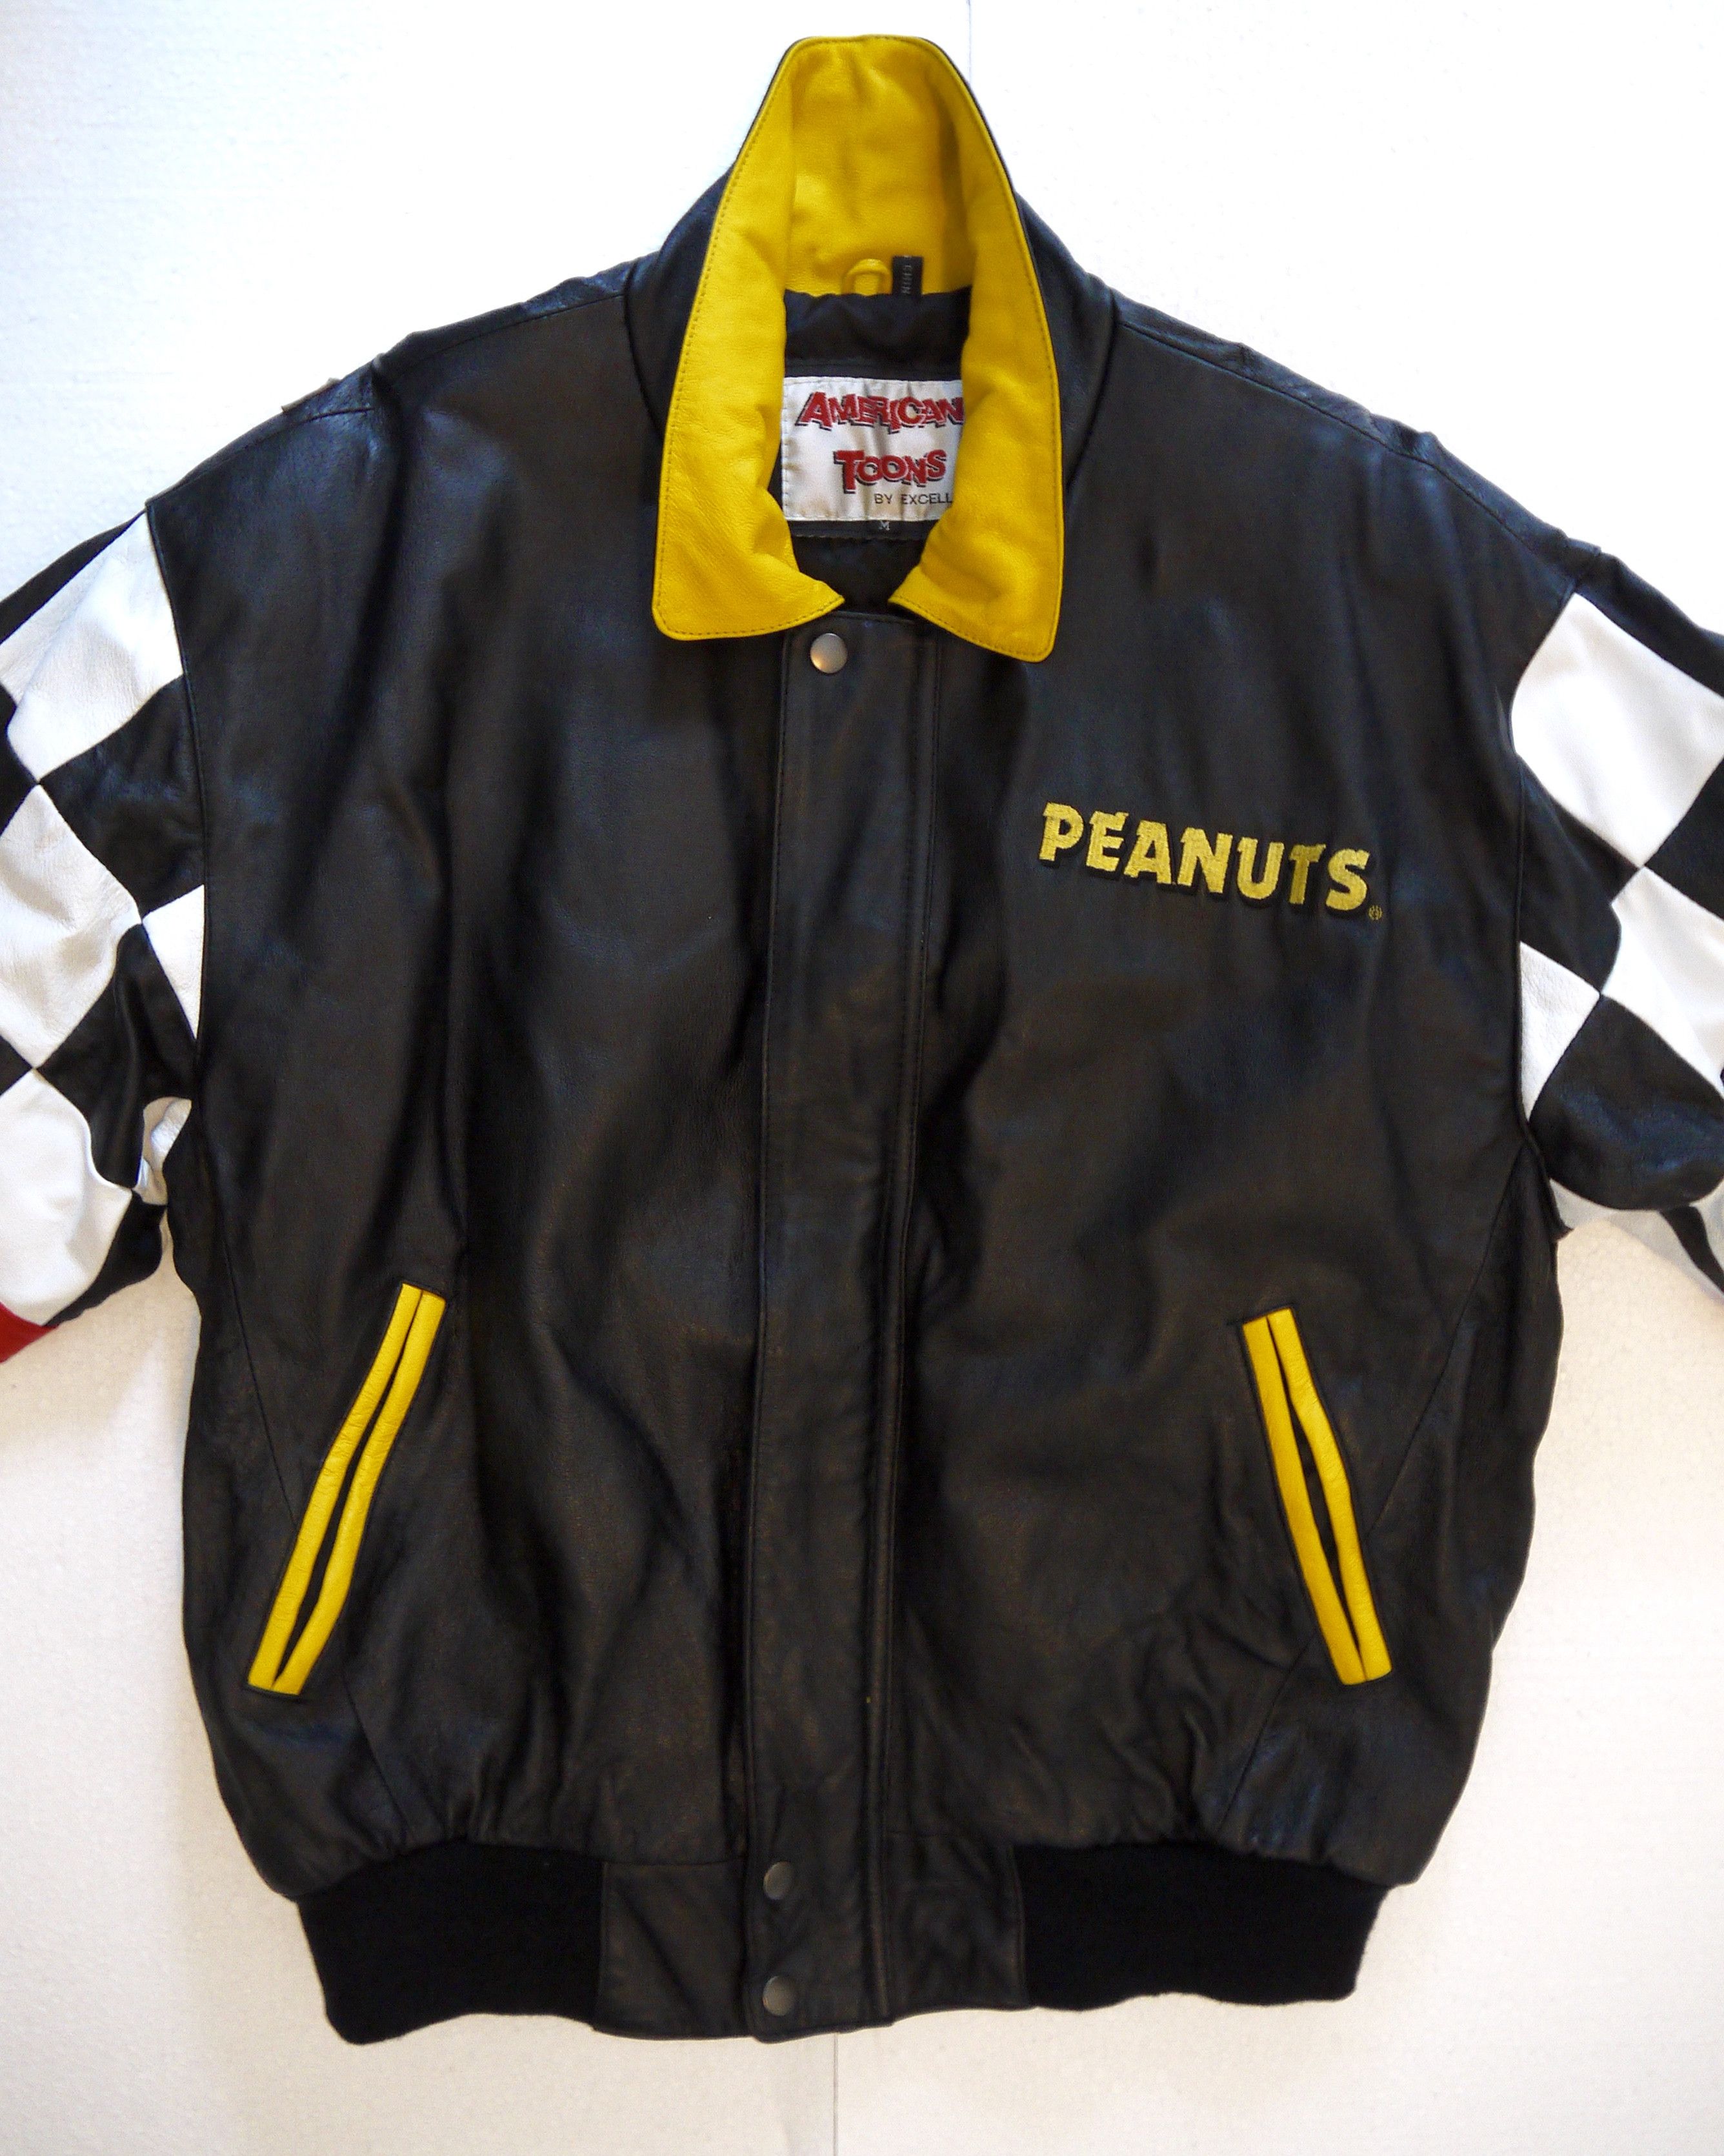 Vintage Vintage Peanuts American Toons Excelled Leather Jacket 